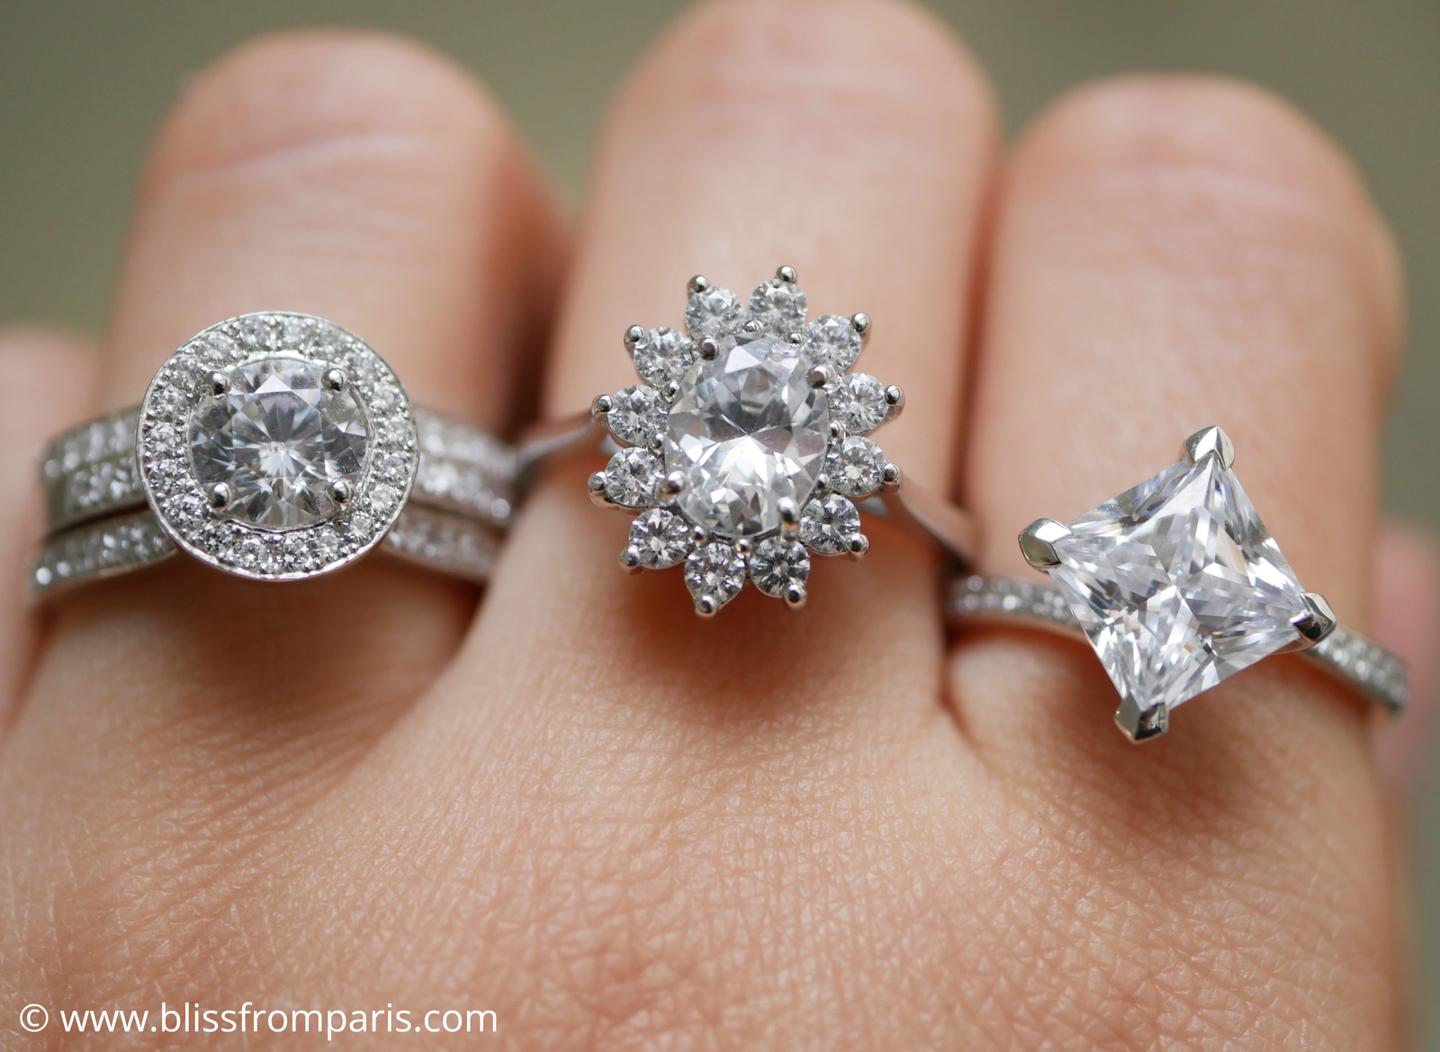 Inhalen Belichamen Plicht Wearing Engagement Ring On Middle Finger? The Meaning - BAUNAT